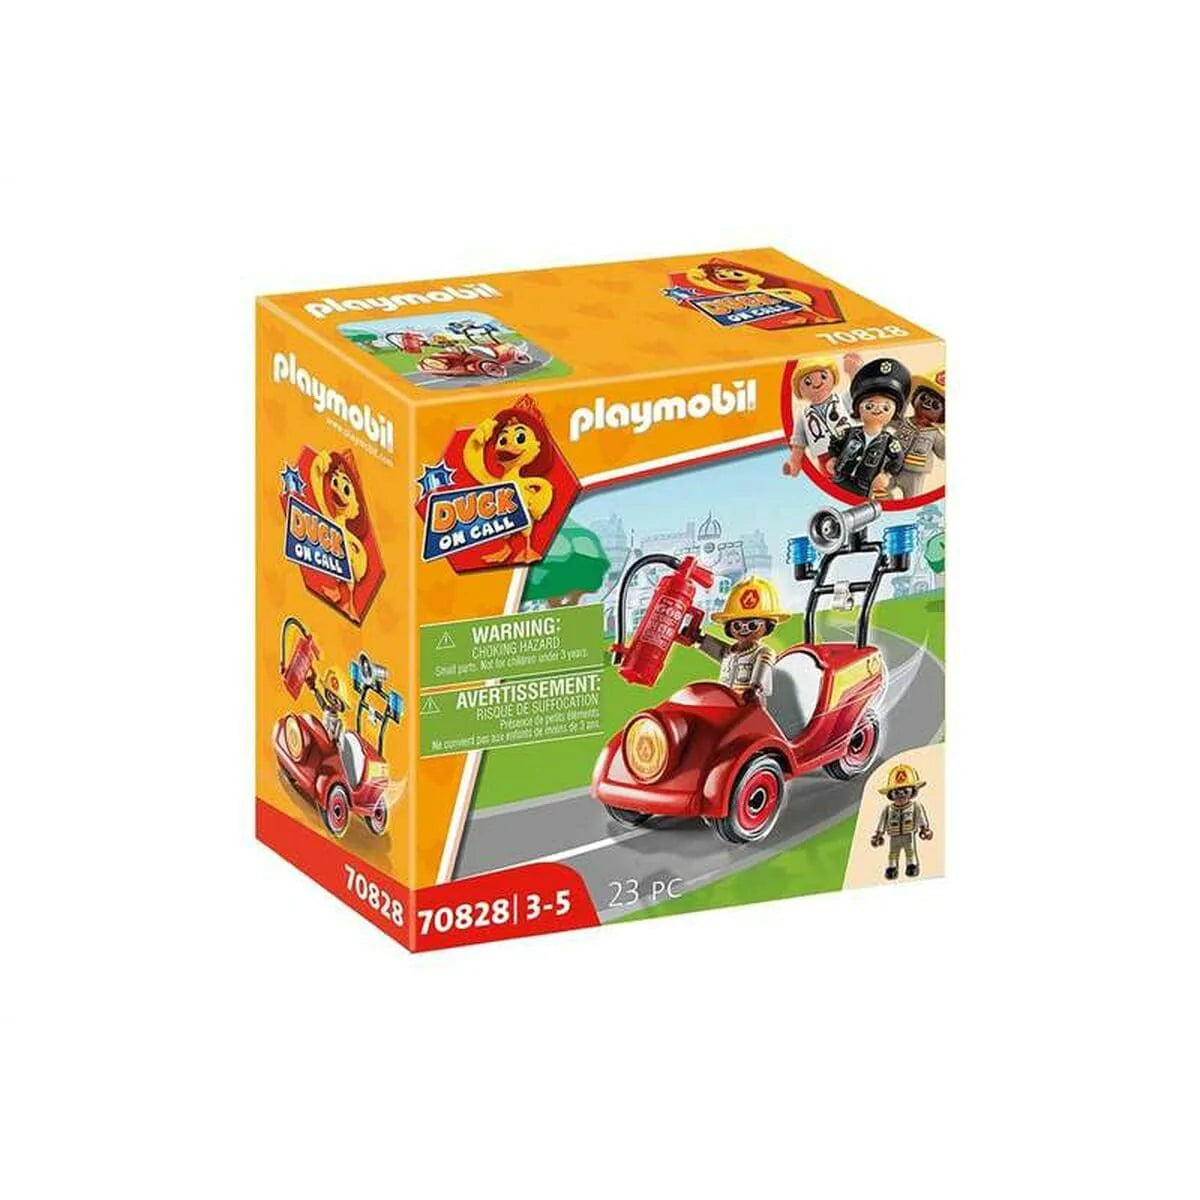 Playmobil Spielzeug | Kostüme > Spielzeug und Spiele > Weiteres spielzeug Playset Playmobil Duck on Call 70828 Auto Feuerwehrmann Mini (23 pcs)